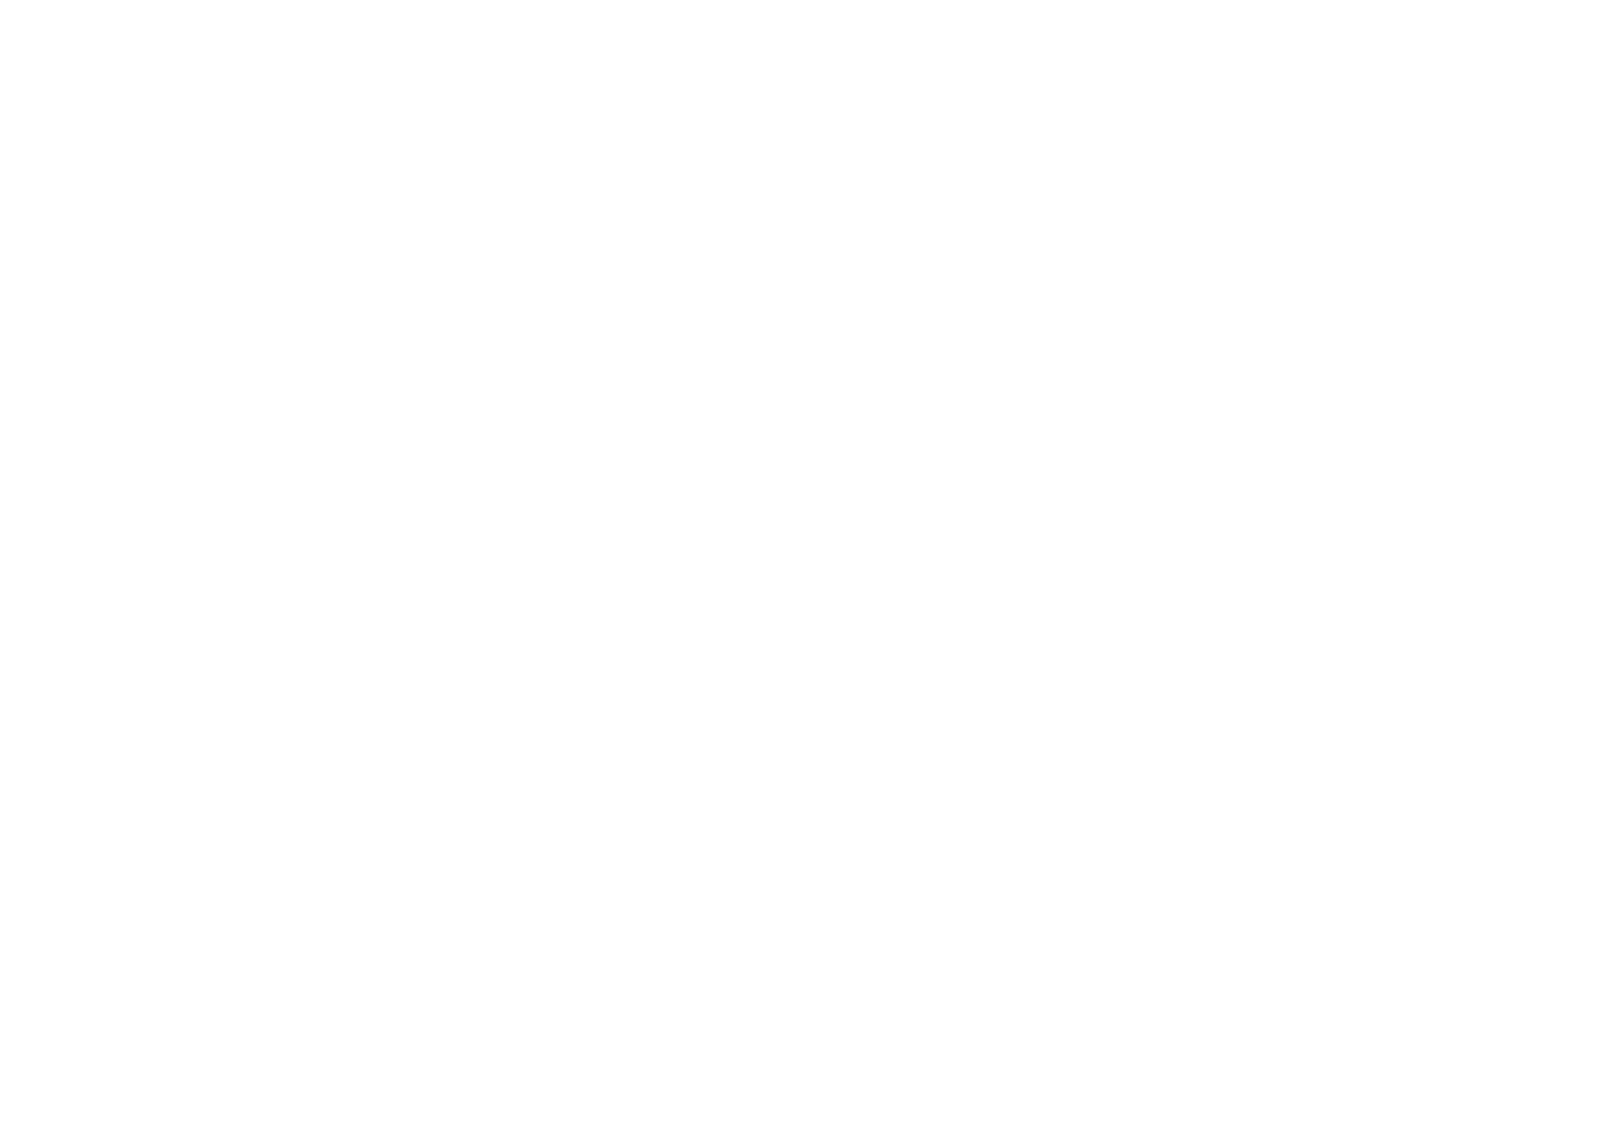 Cochlear logo large for dark backgrounds (transparent PNG)